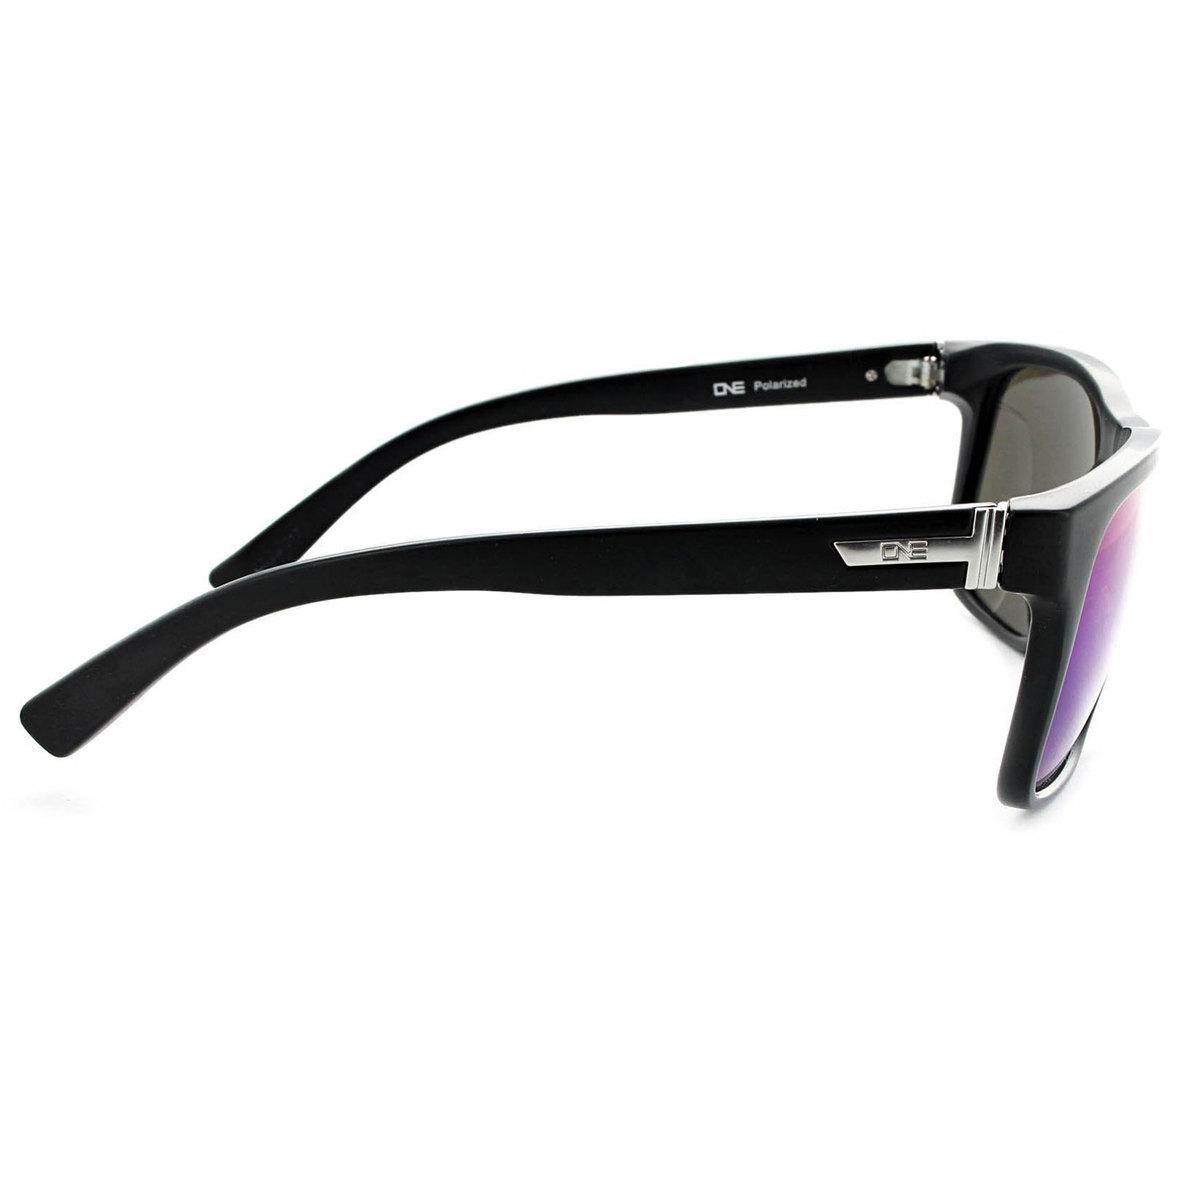 ONE Ziggy Polarized Sunglasses - Matte Black/Blue | Sportsman's Warehouse